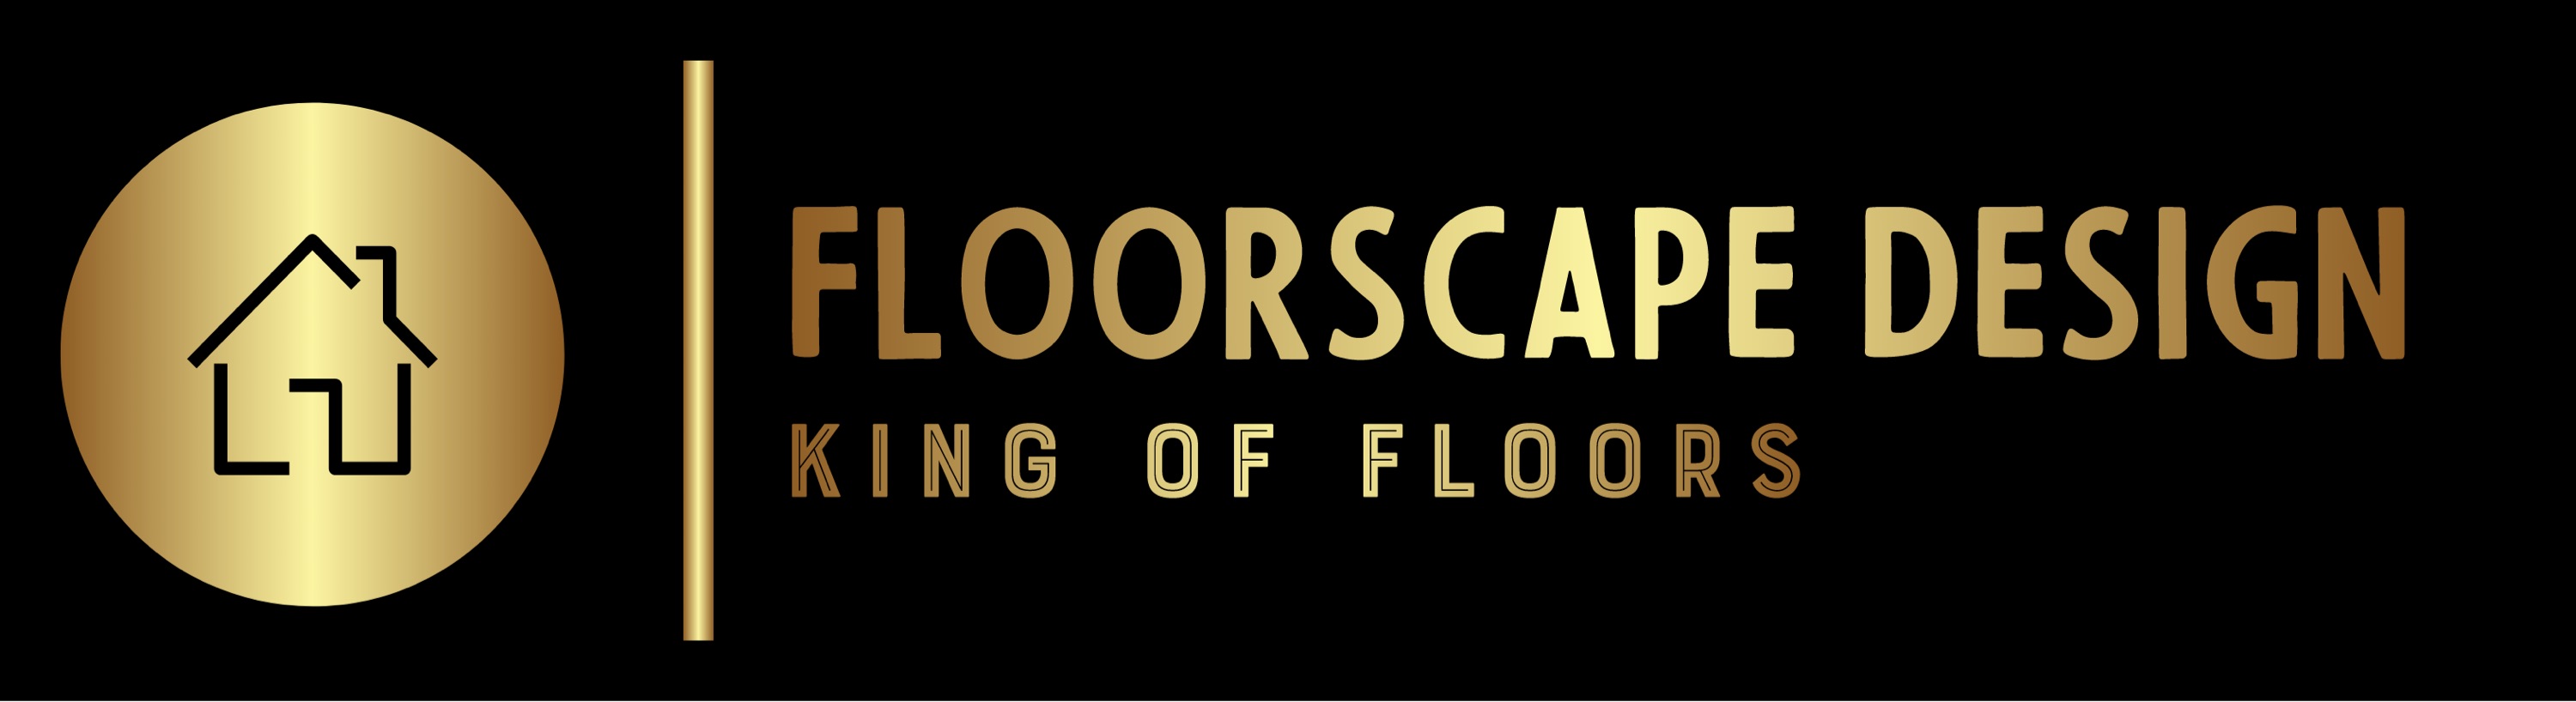 Wood Scape Floor Design Logo